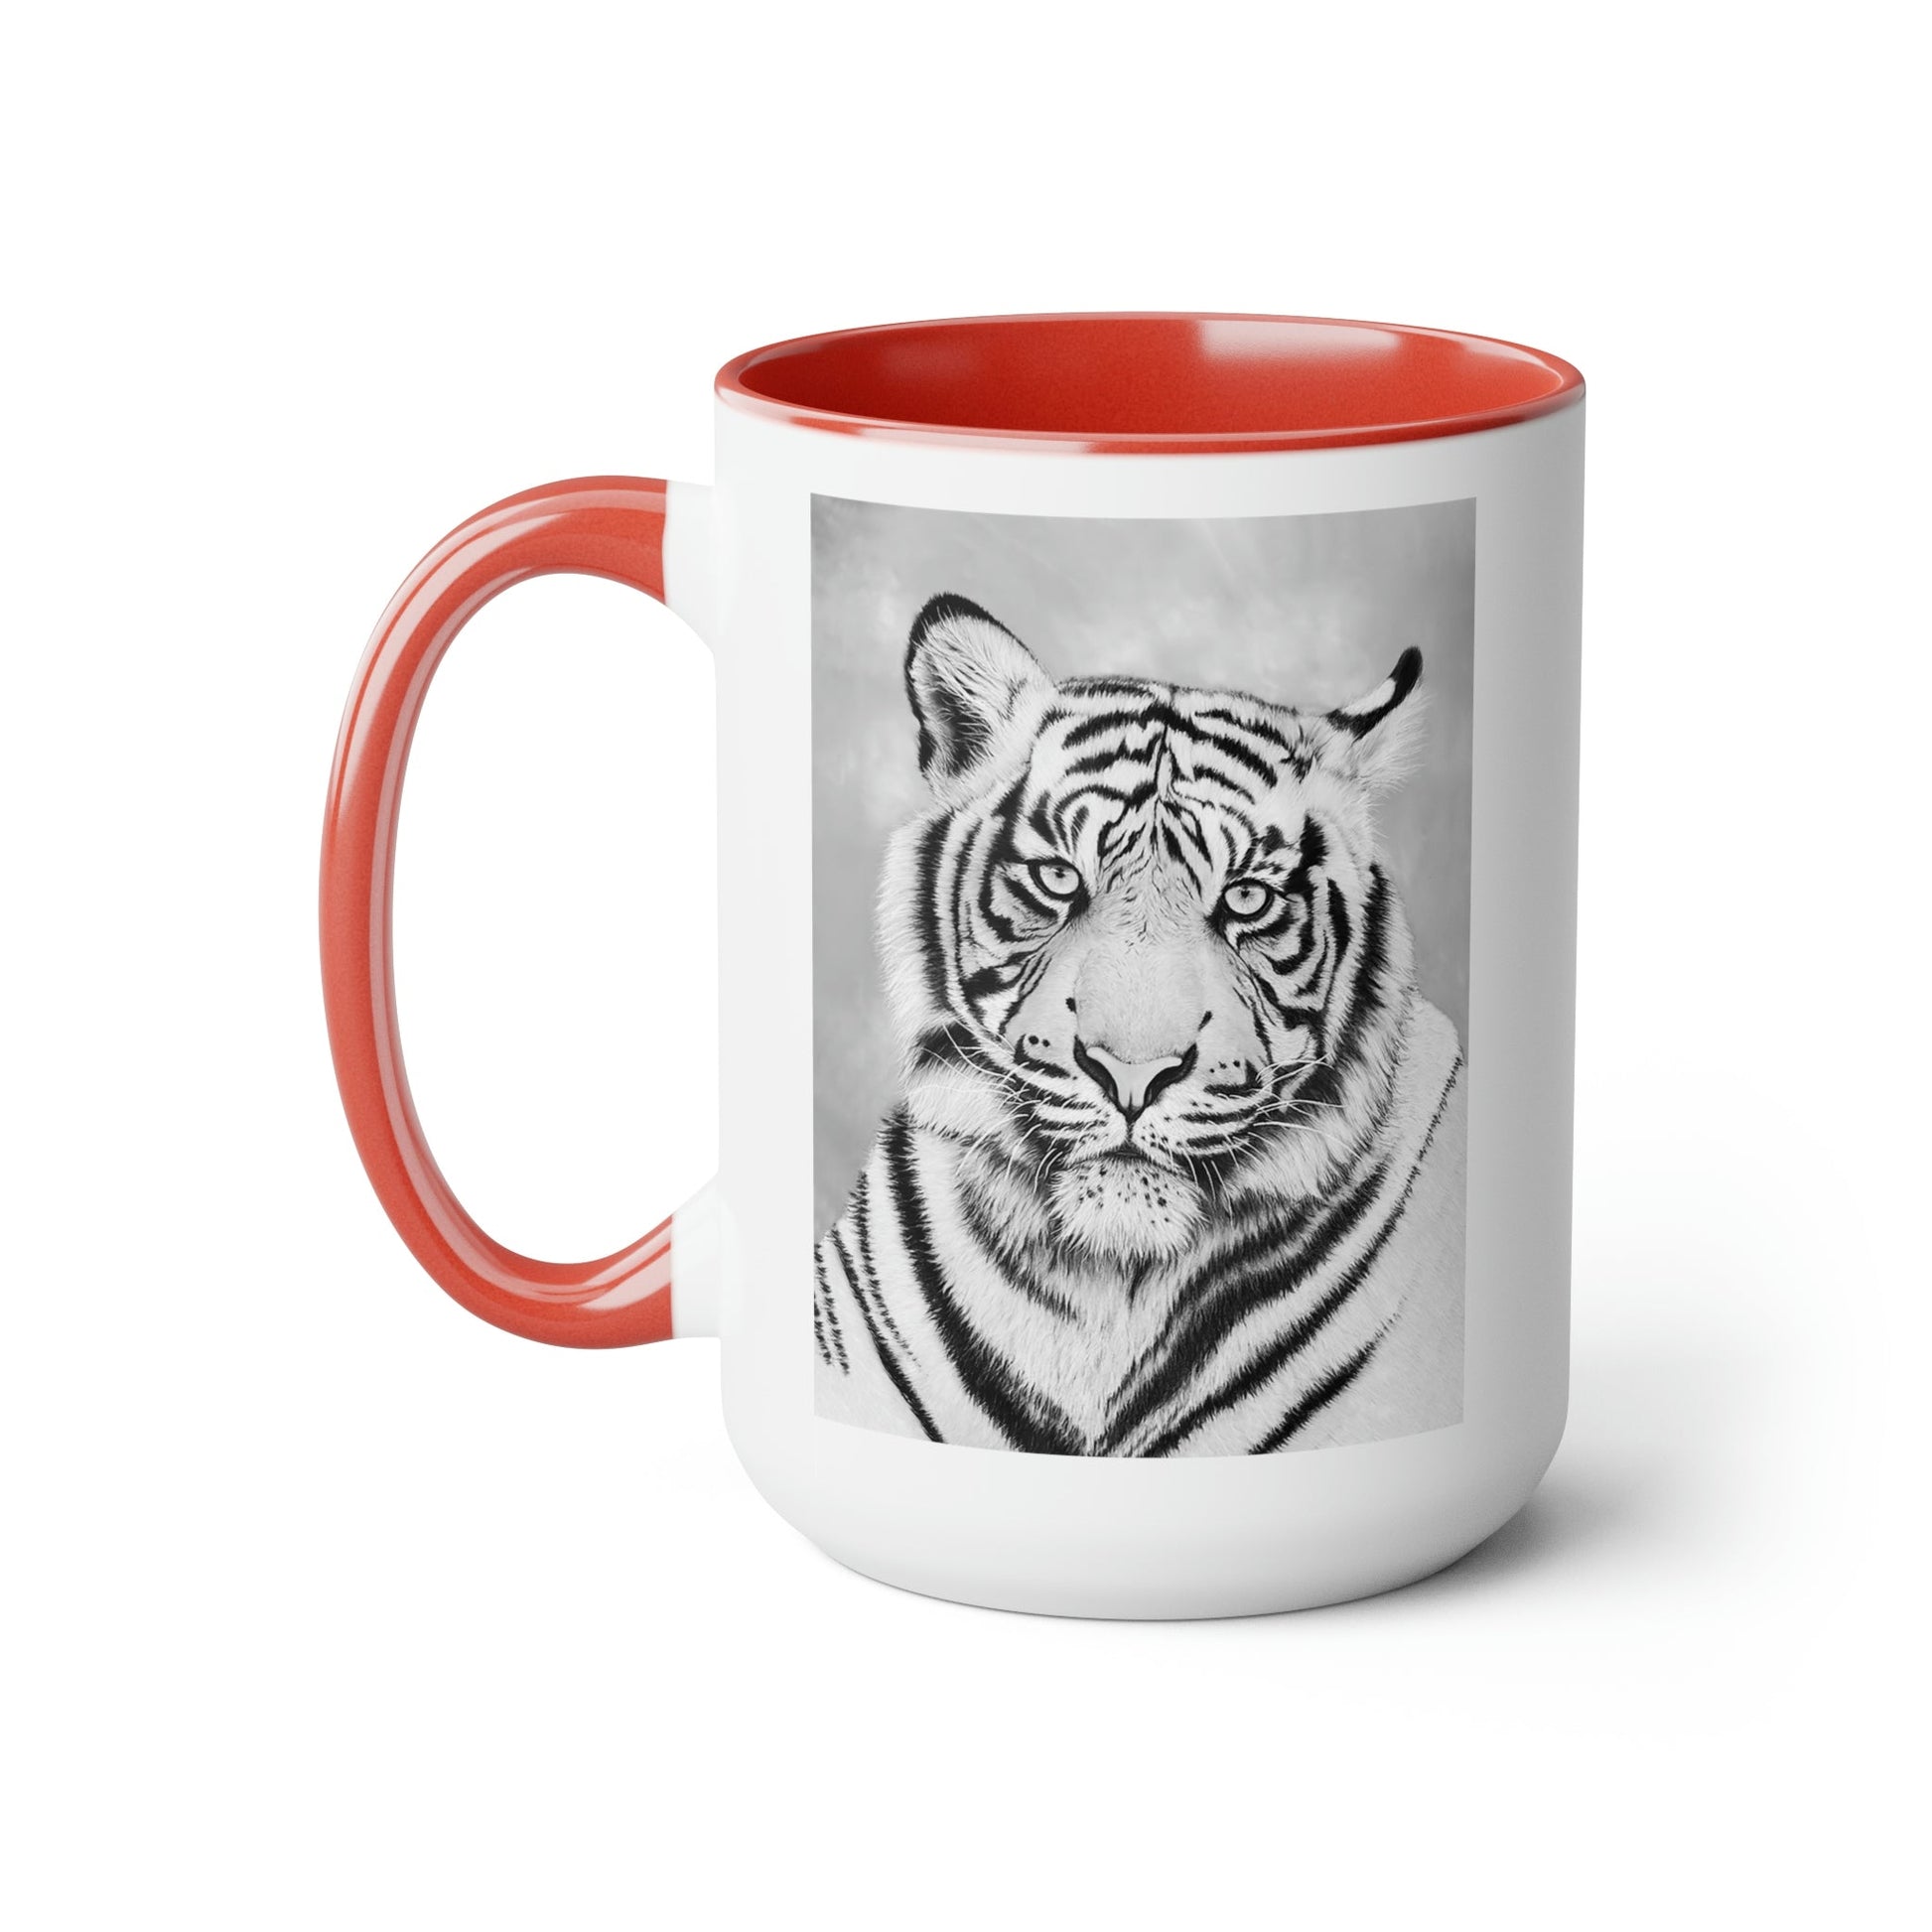 15oz Accent Mug - "MONOCHROME TIGER"